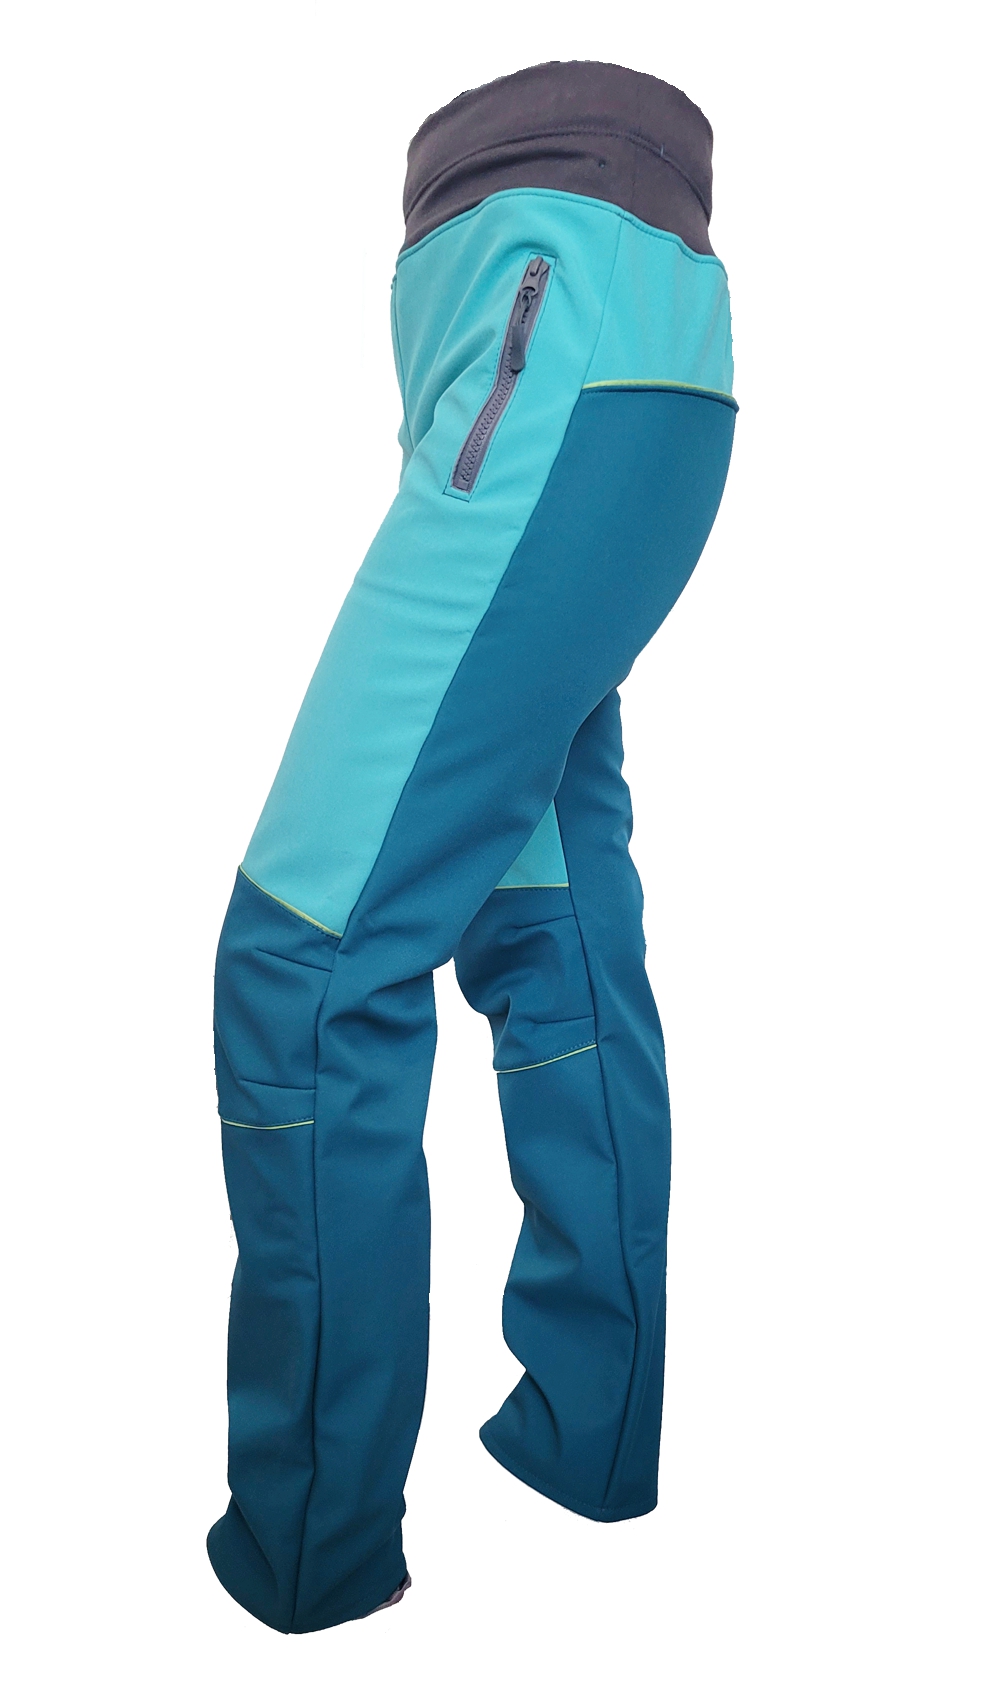 Women's softshell trousers insulated - kerosene-turquoise